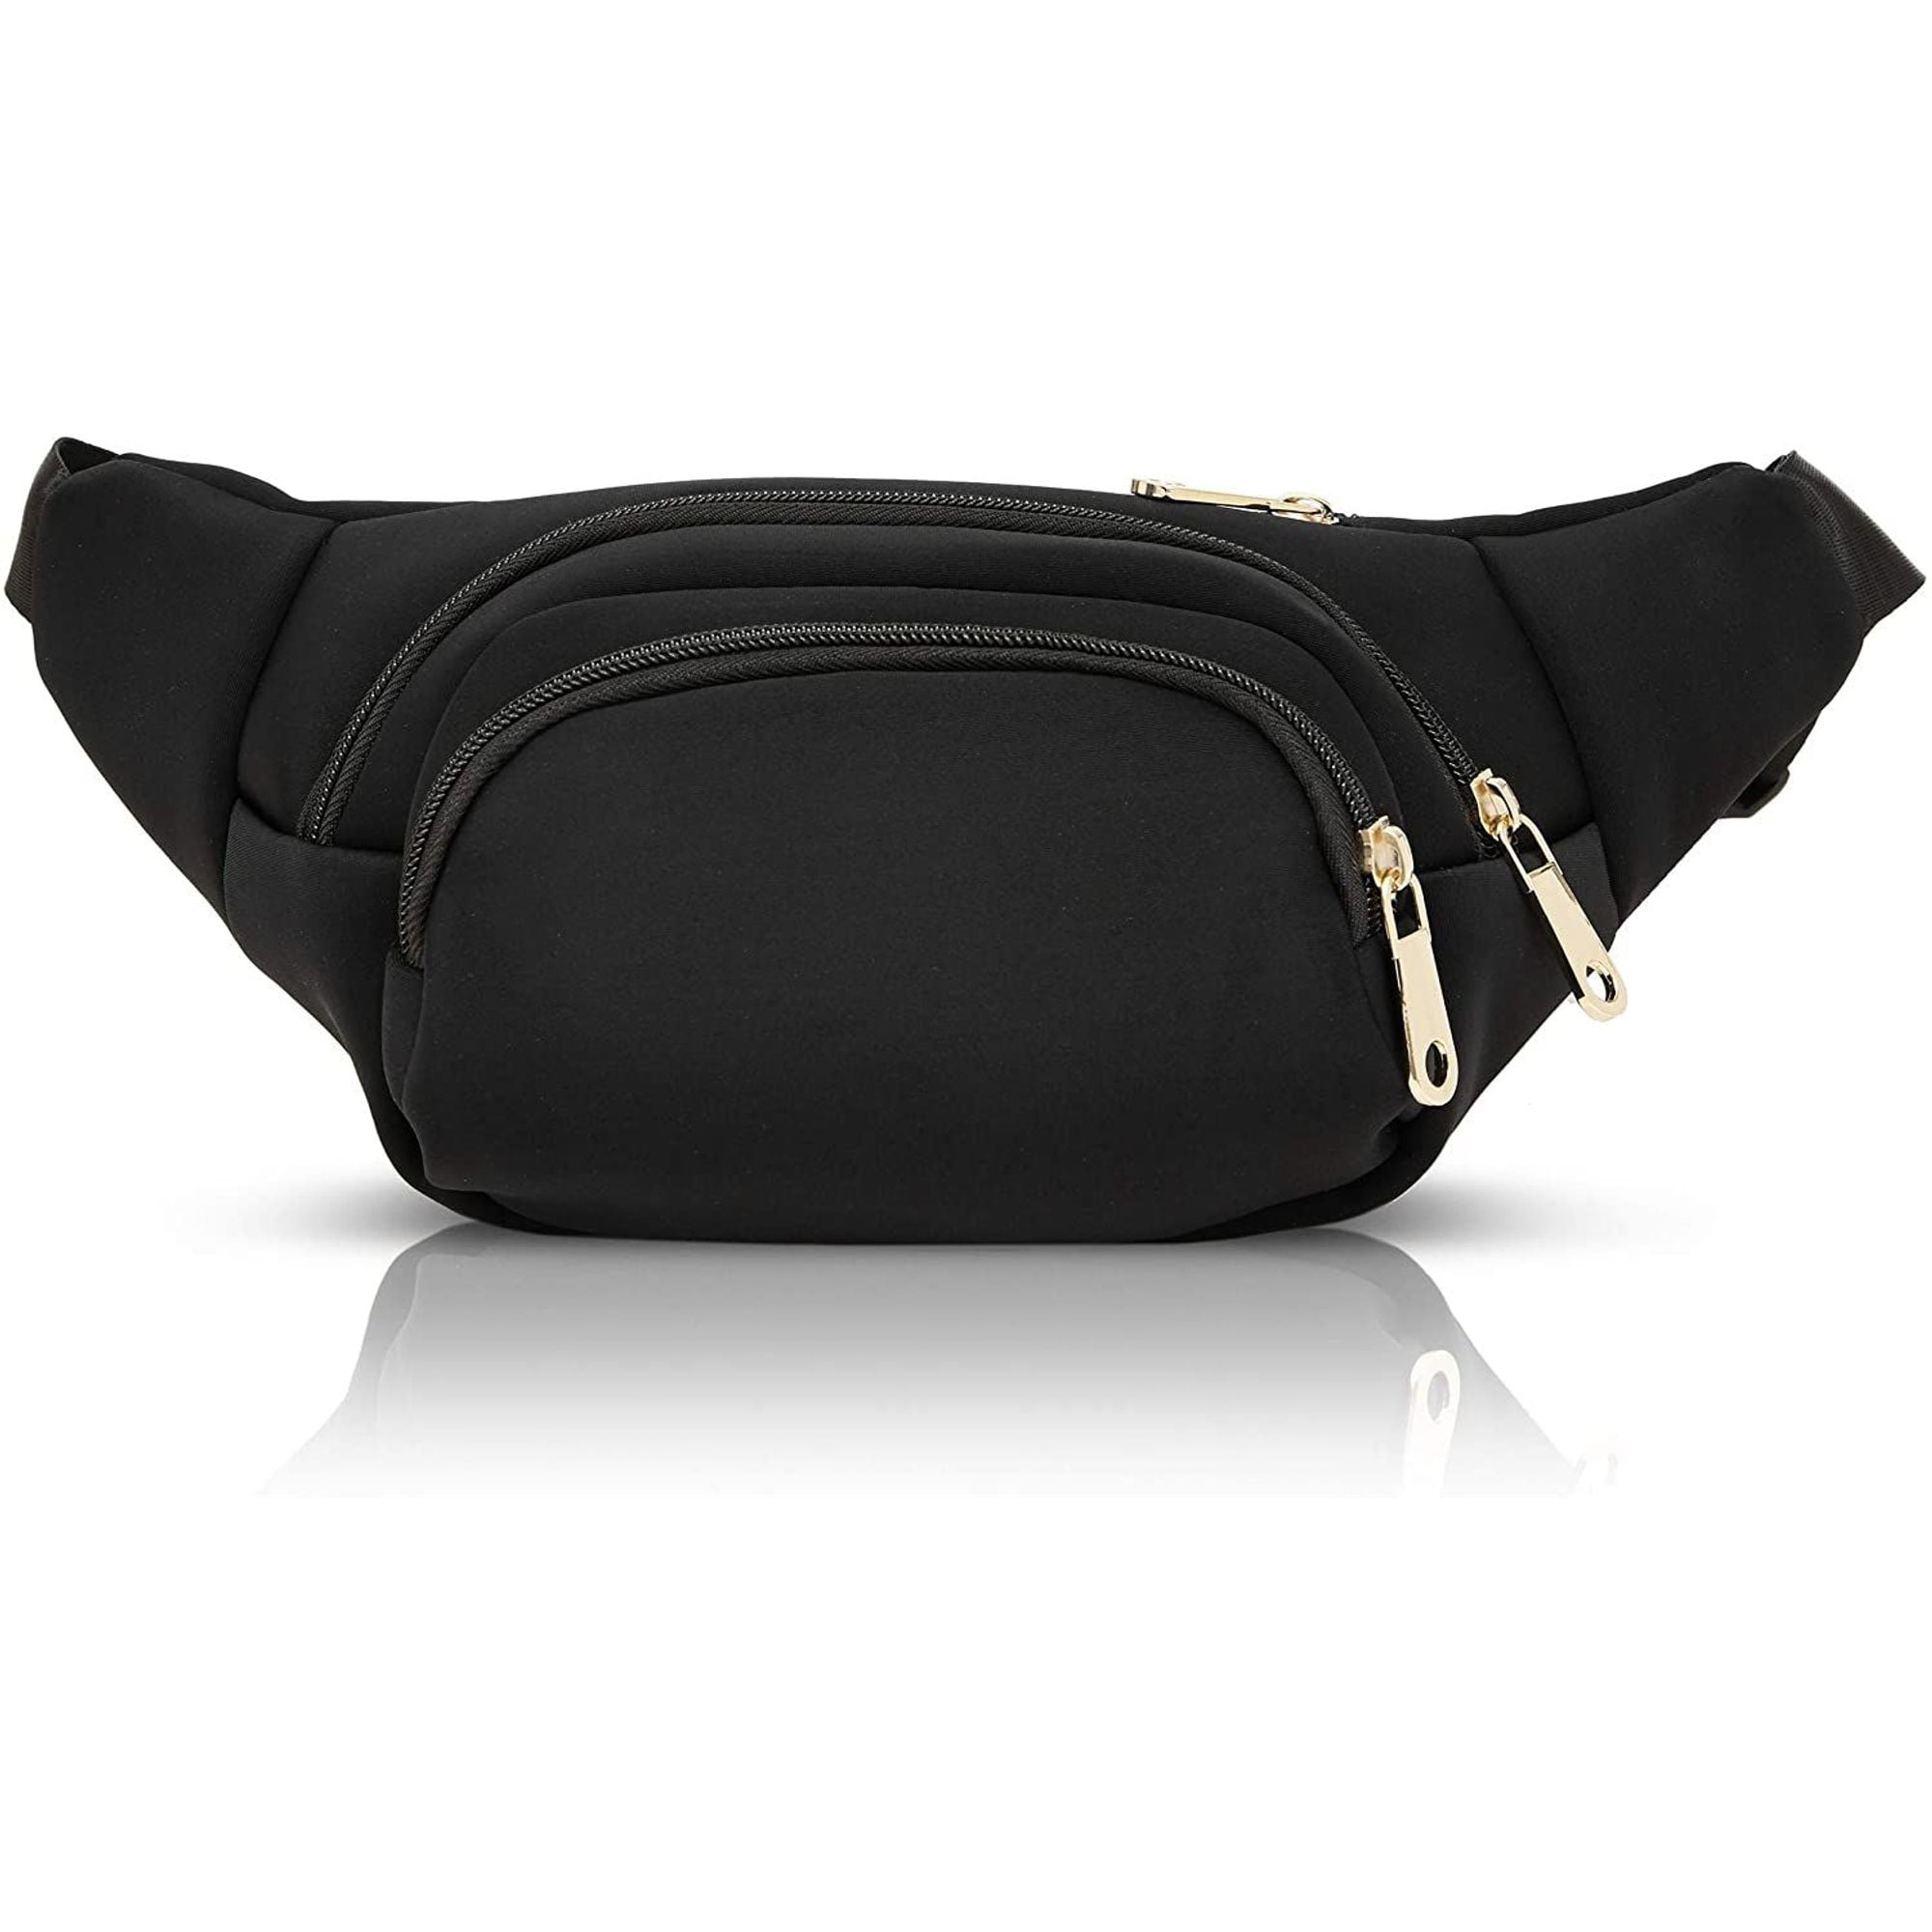 Clear Fanny Pack, Waterproof Waist Belt Bag for Travel, Beach 